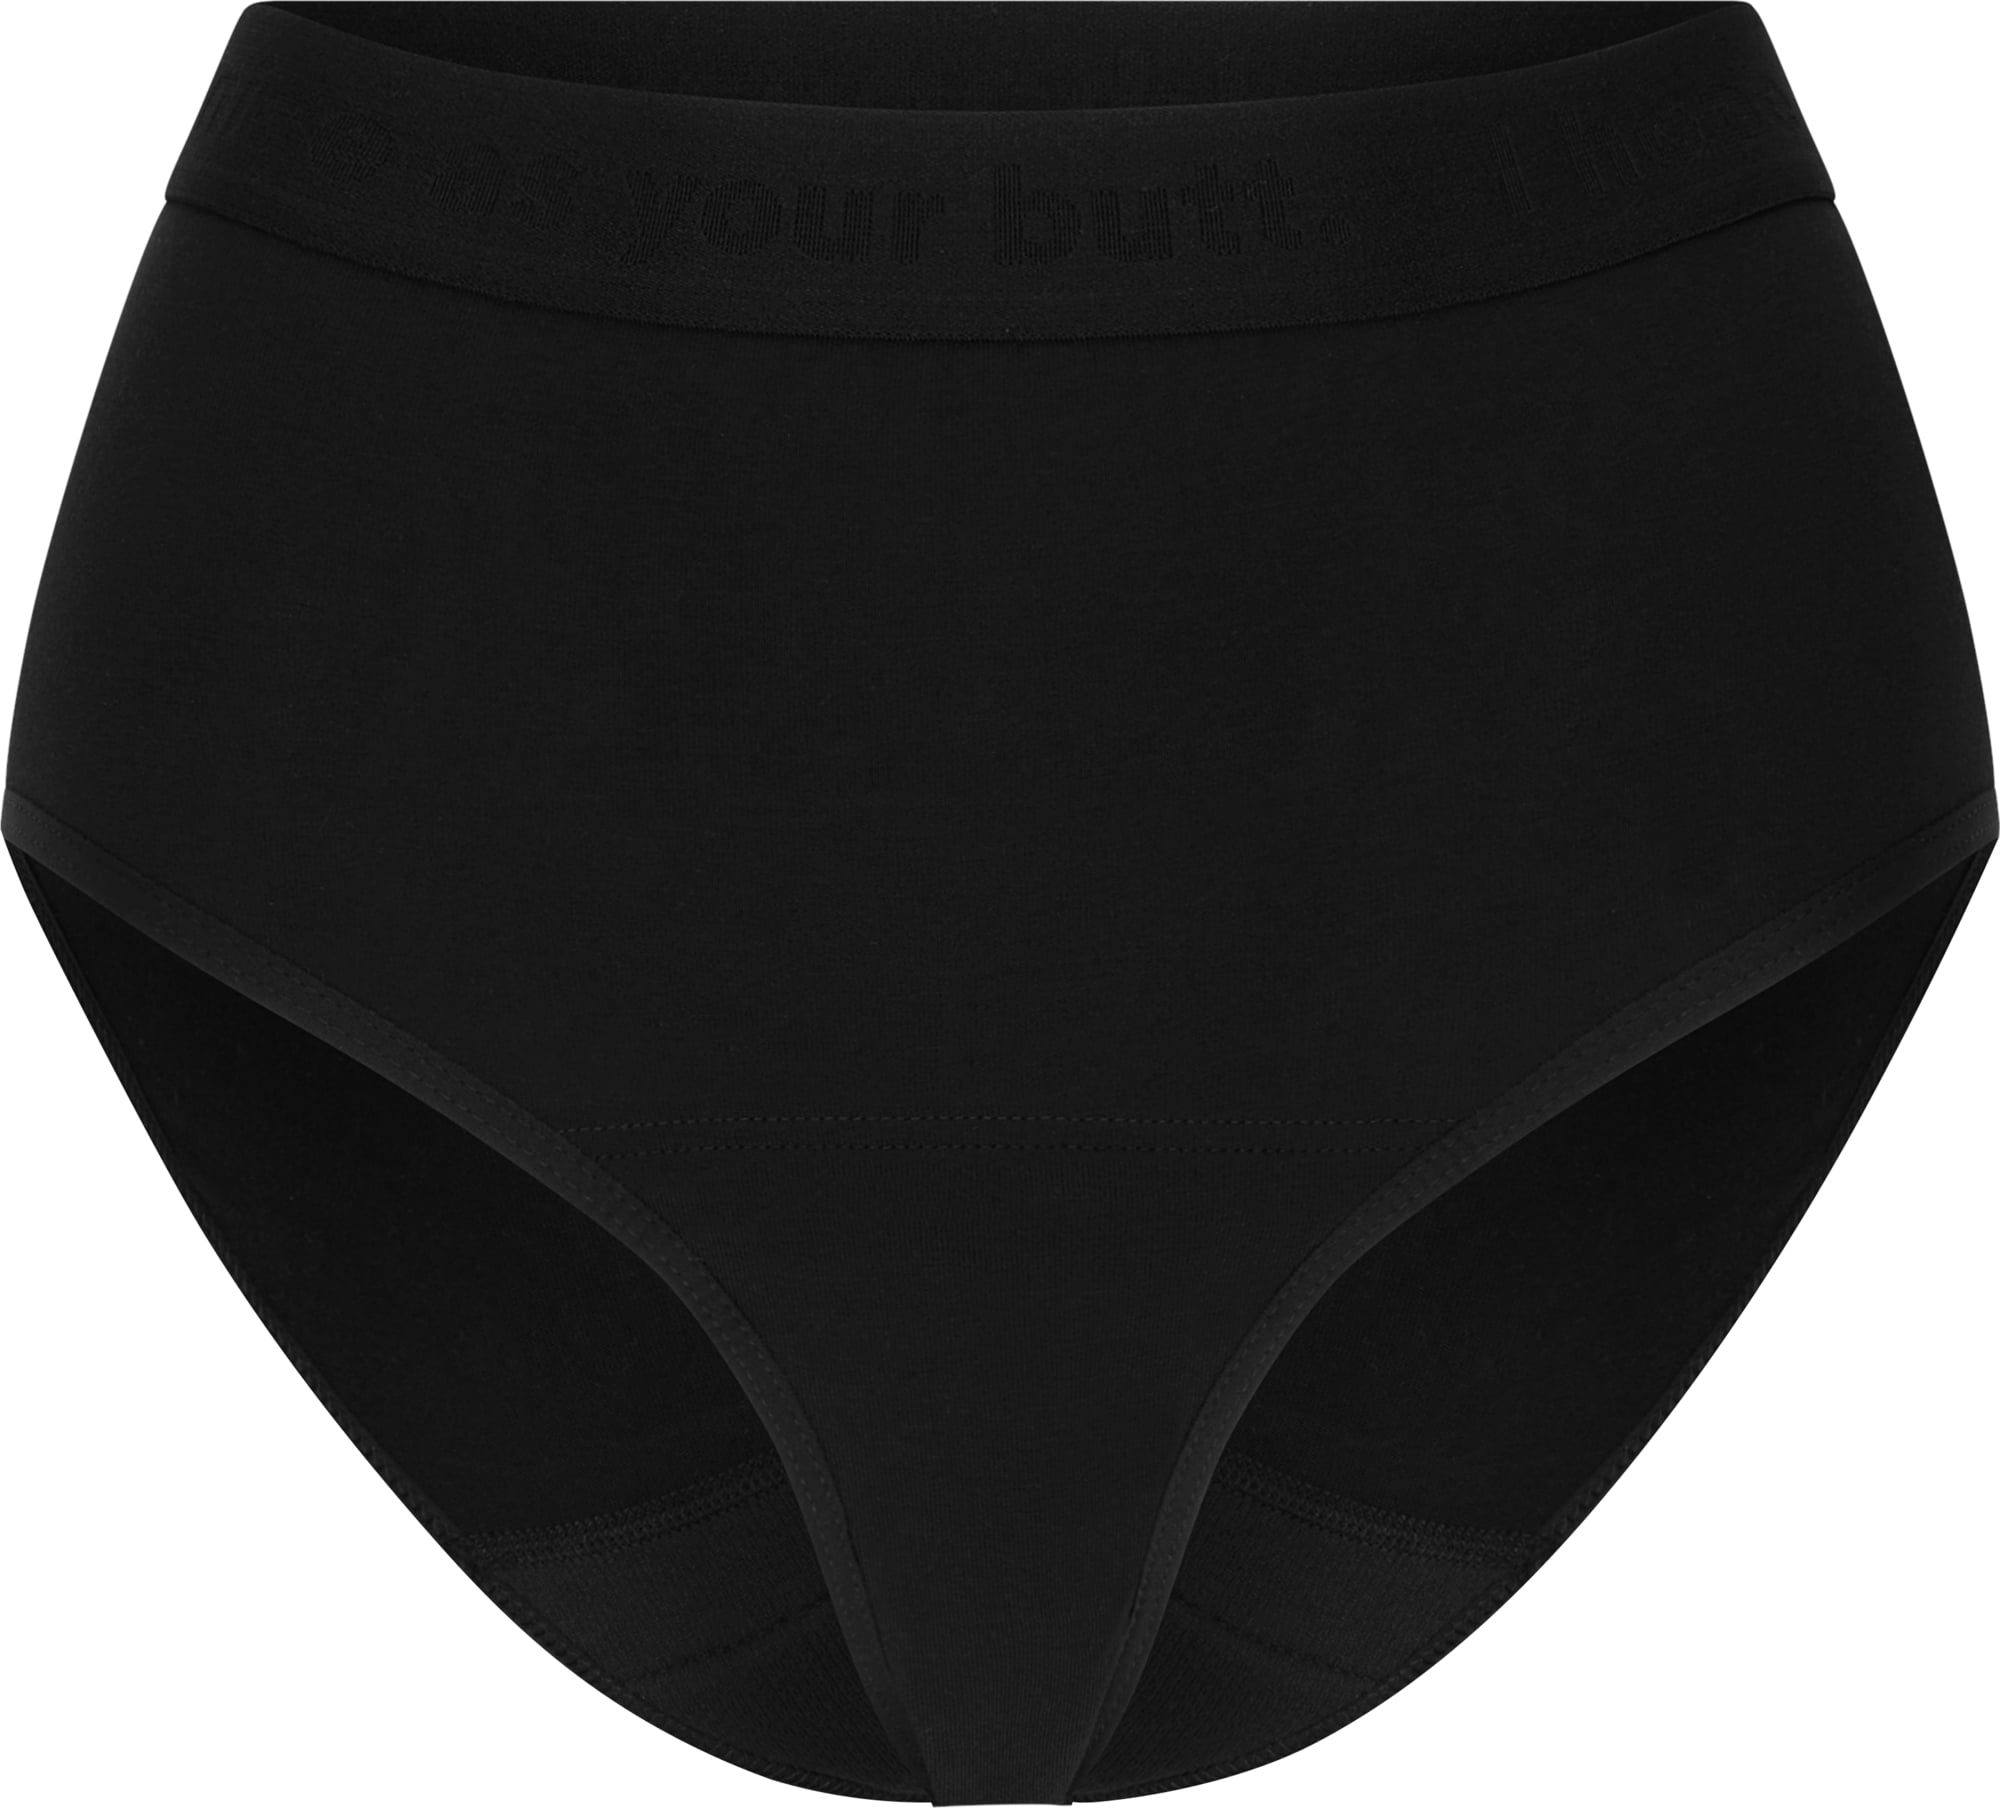 https://ec.nice-cdn.com/upload/image/product/large/default/the-female-company-period-underwear-high-waist-basic-black-normal-56-2044151-en.jpg